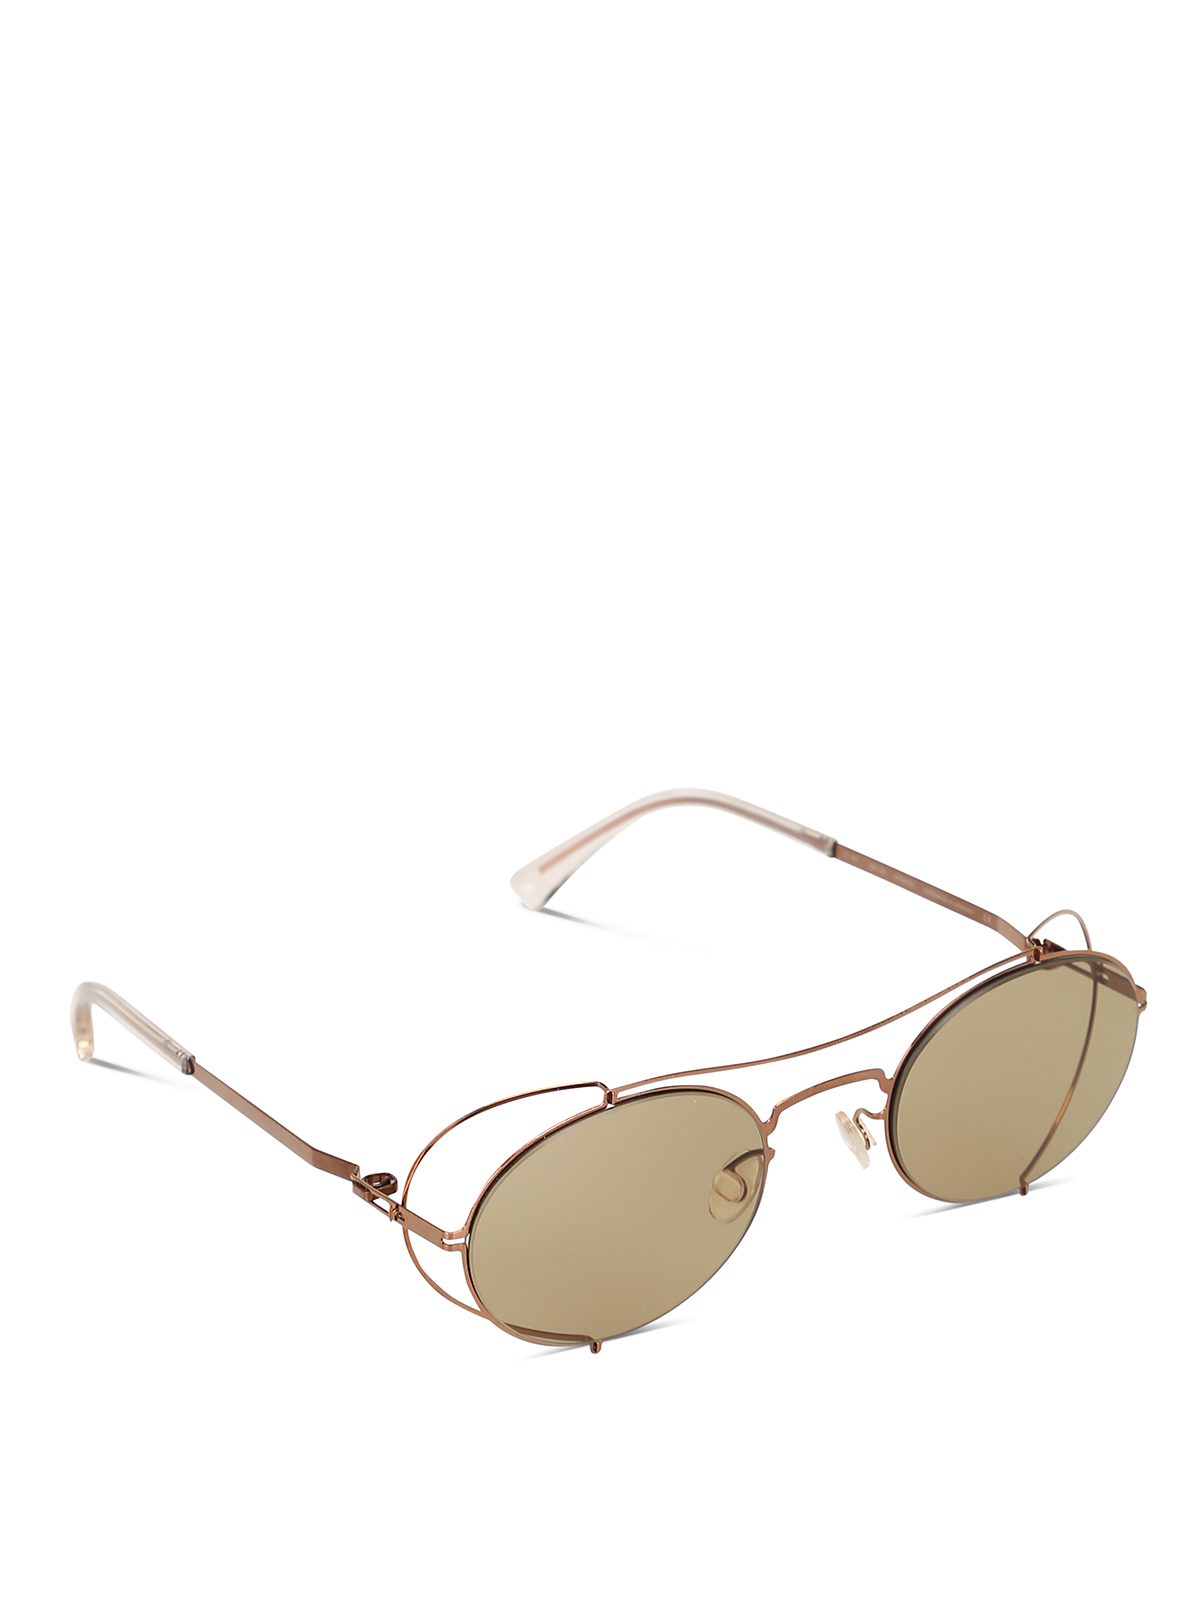 Mykita x Maison Margiela oval sunglasses